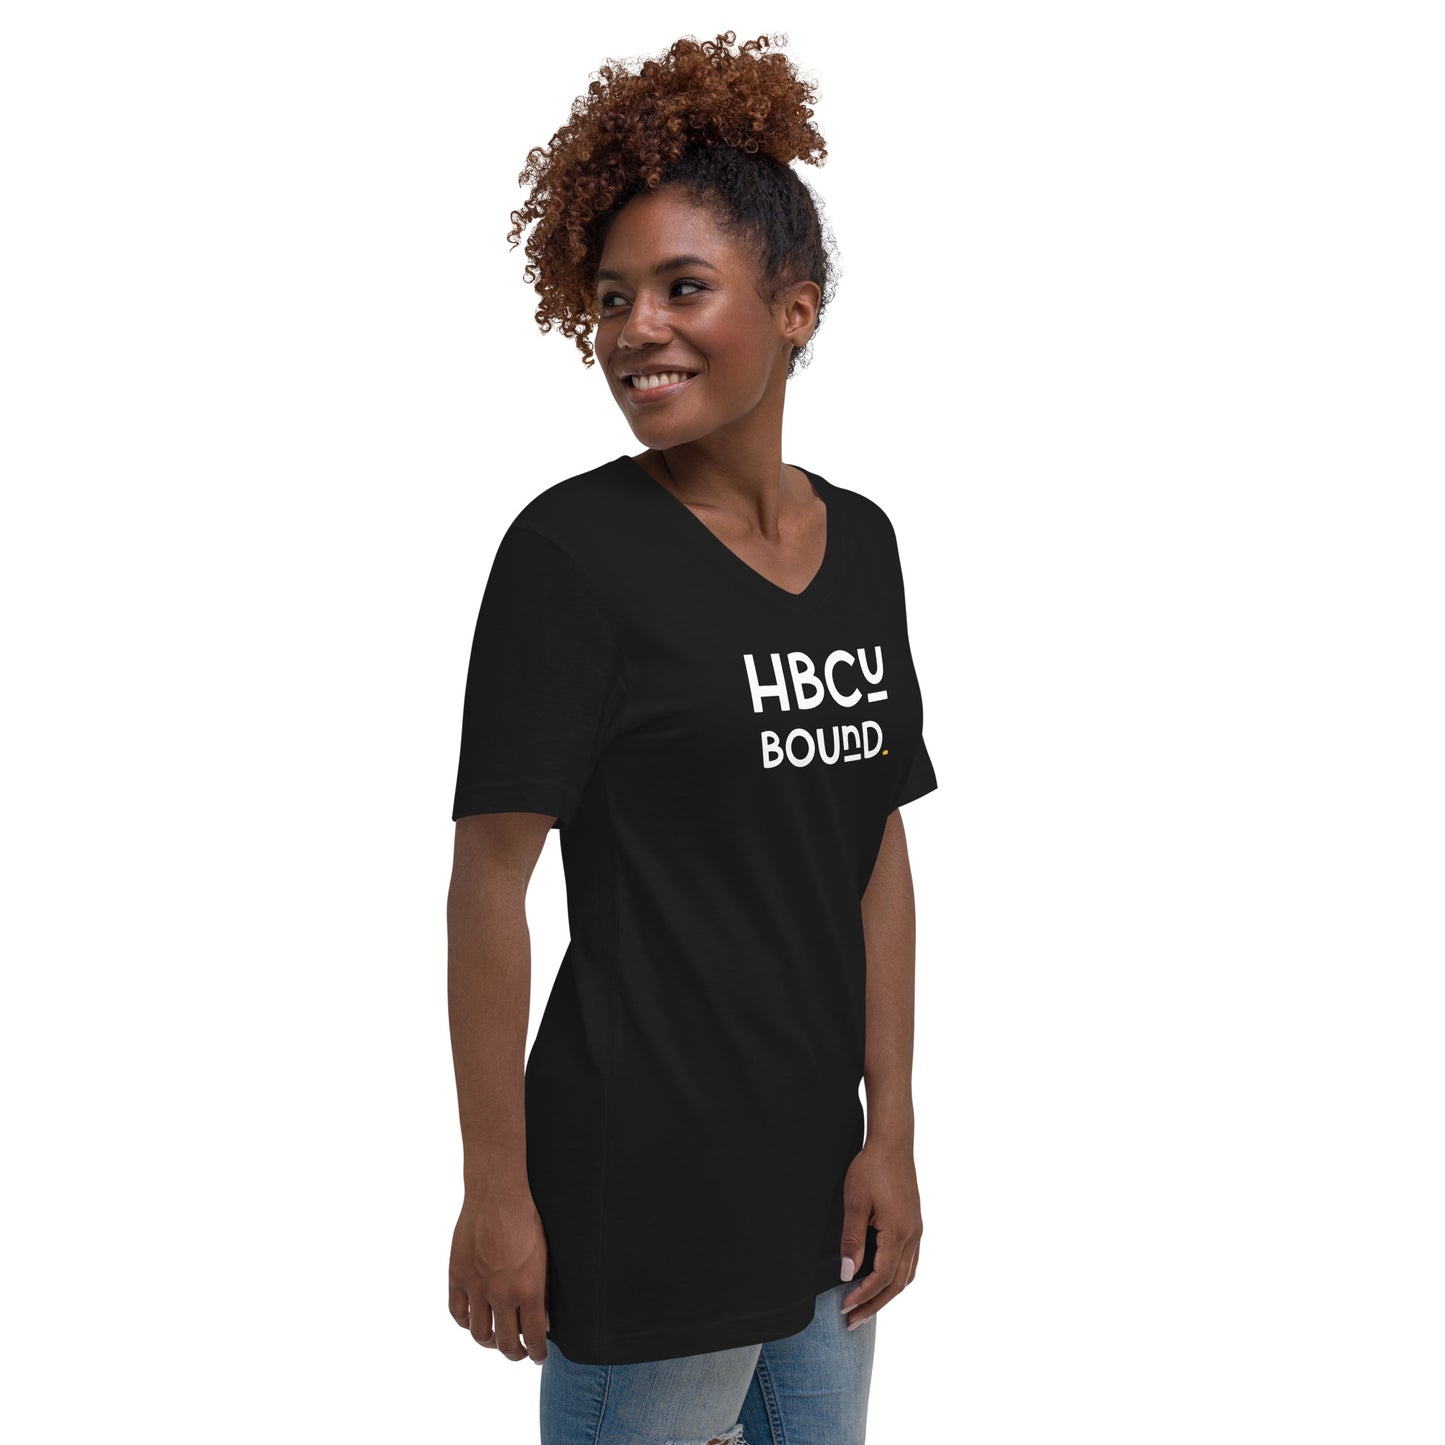 Bound - HBCU Unisex V-Neck T-Shirt